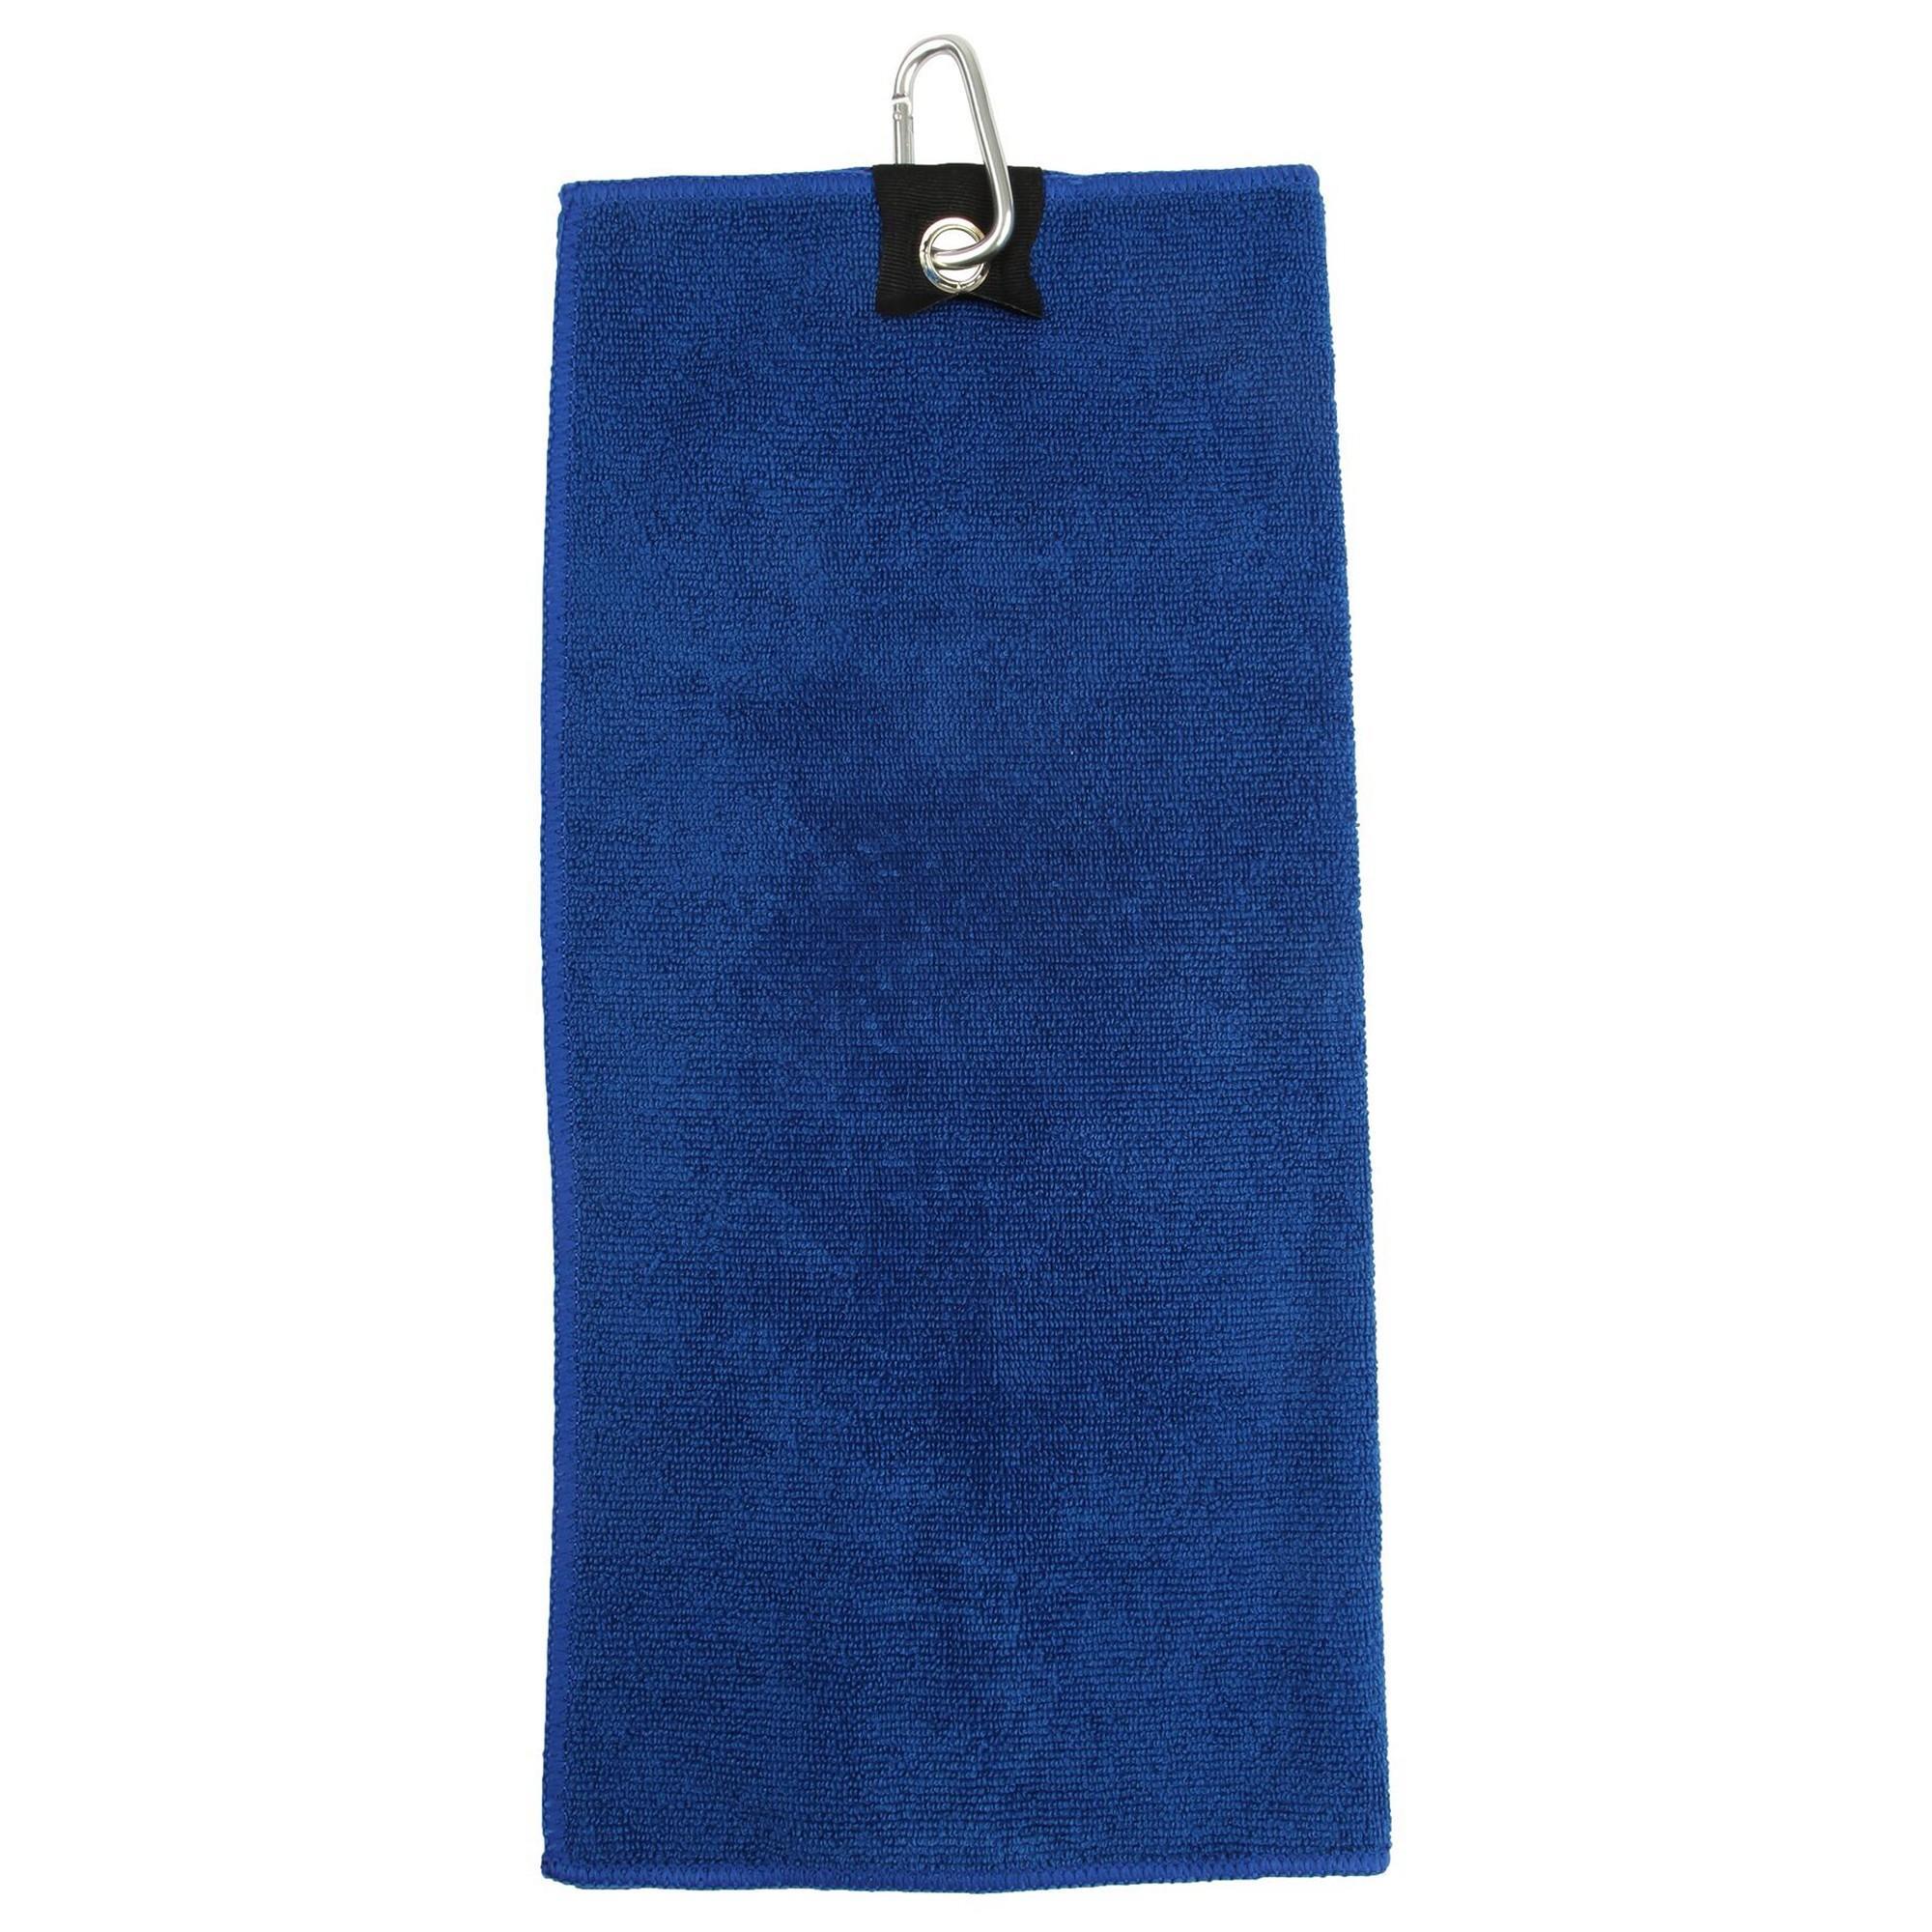 Towel City Microfibre Golf Towel (Royal) (One Size)